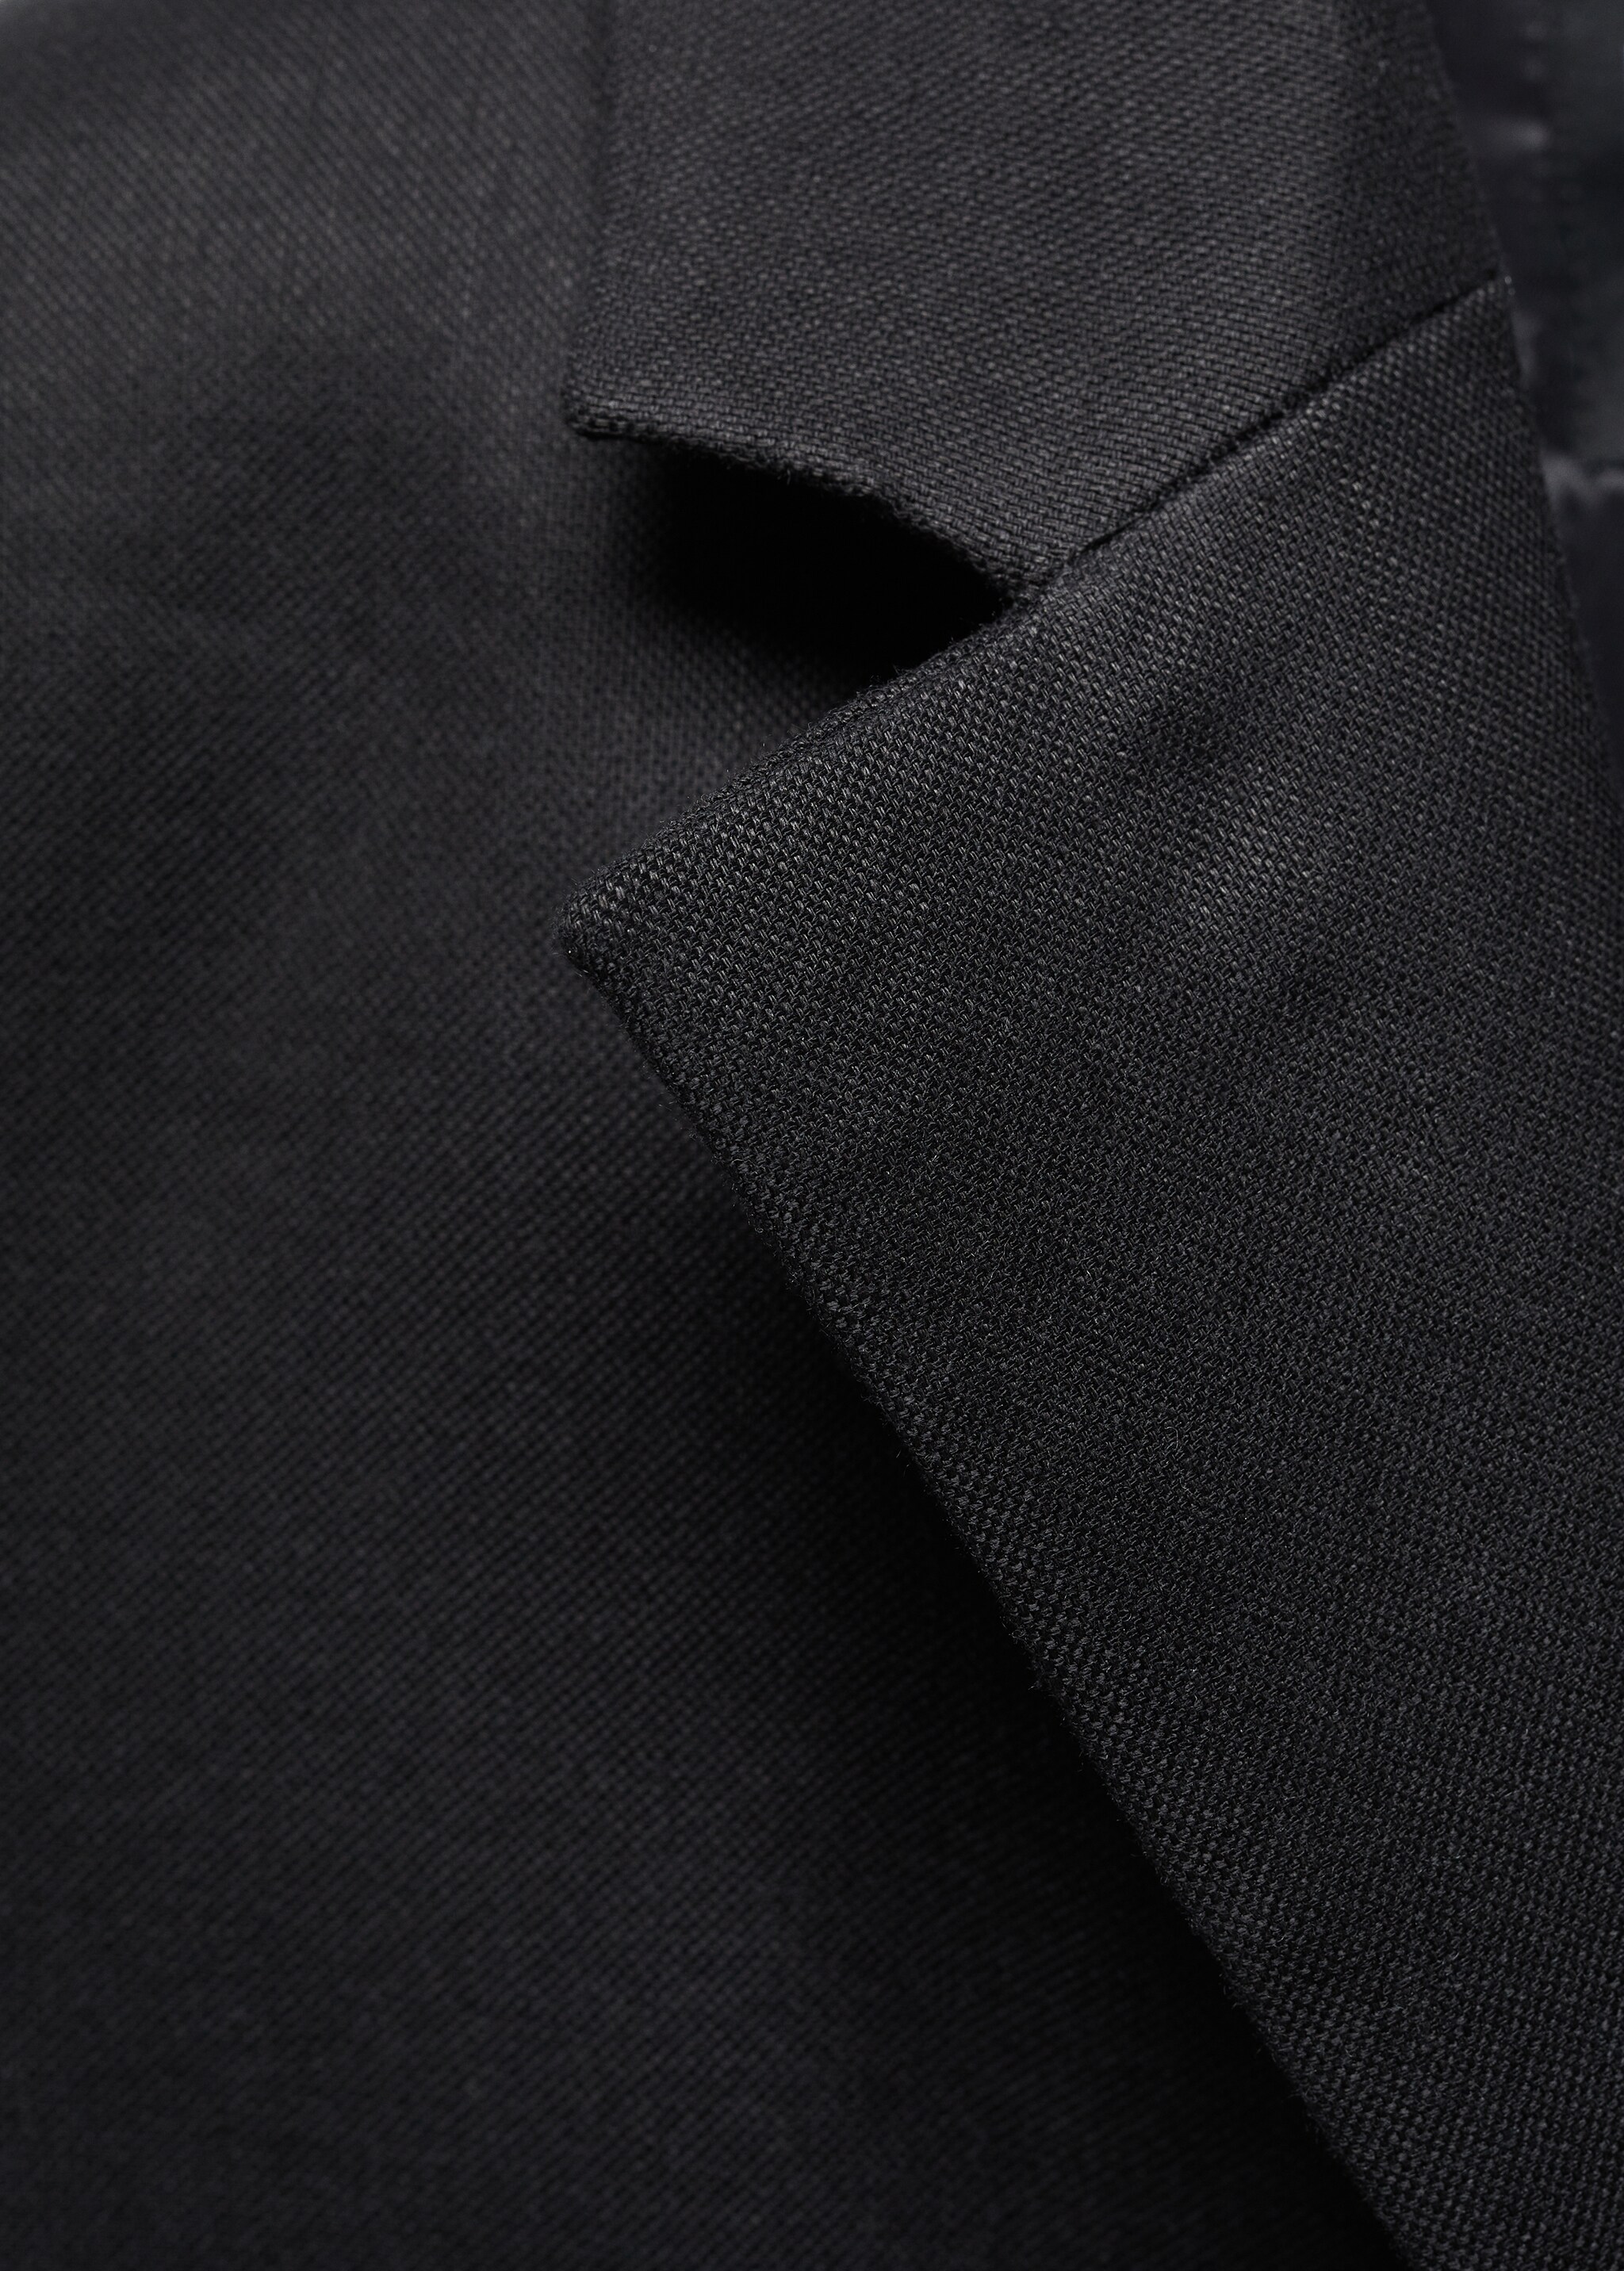 Linen button blazer - Details of the article 8